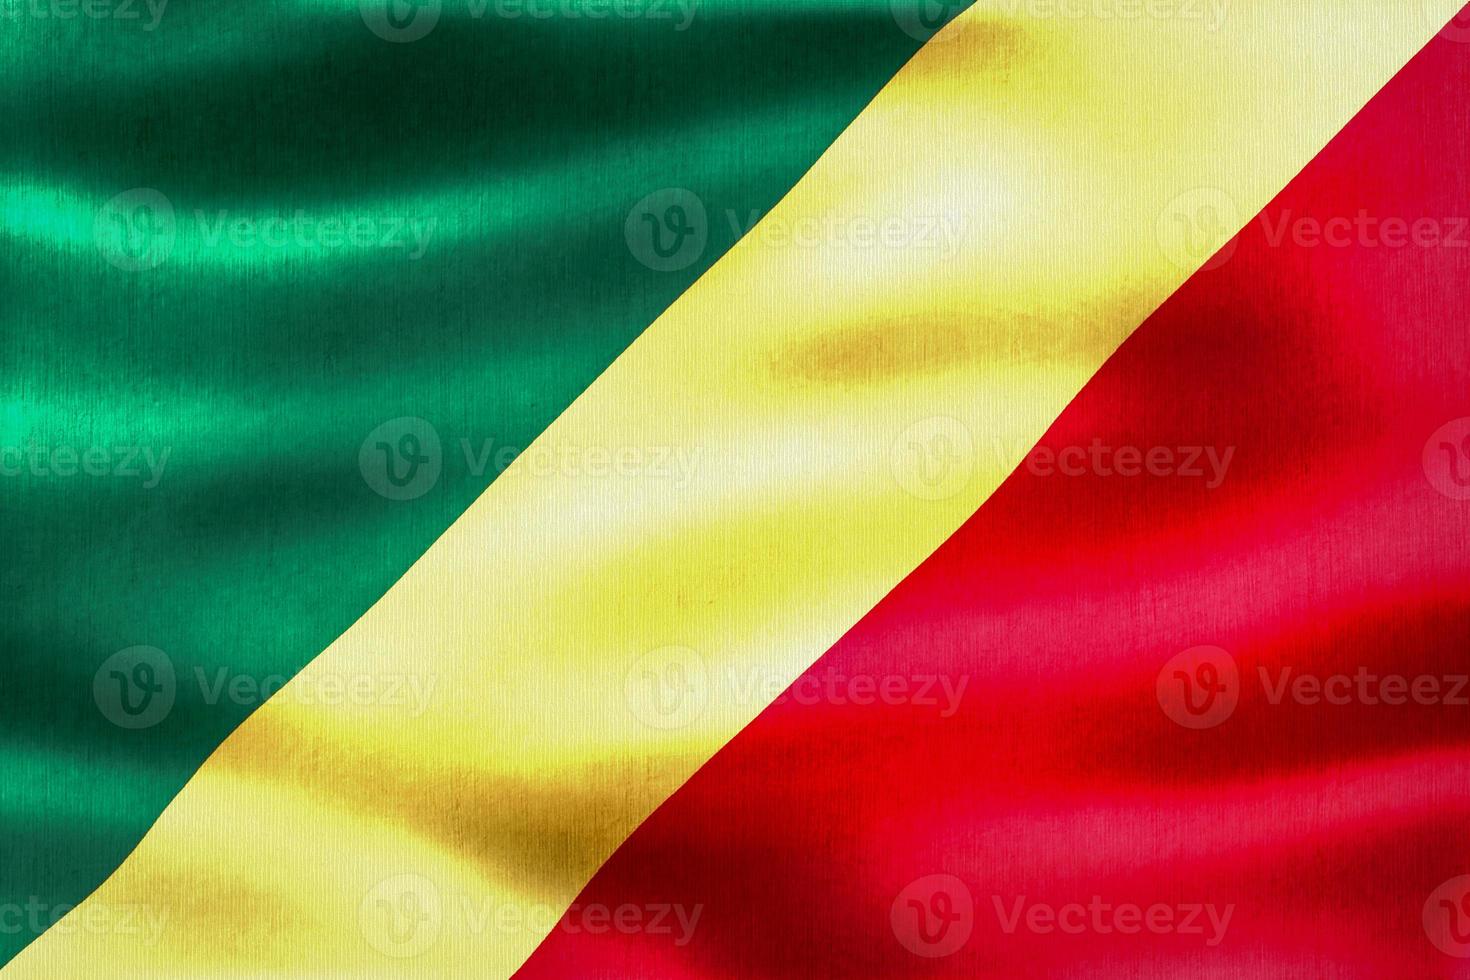 republiken Kongoflaggan - realistiskt viftande tygflagga foto